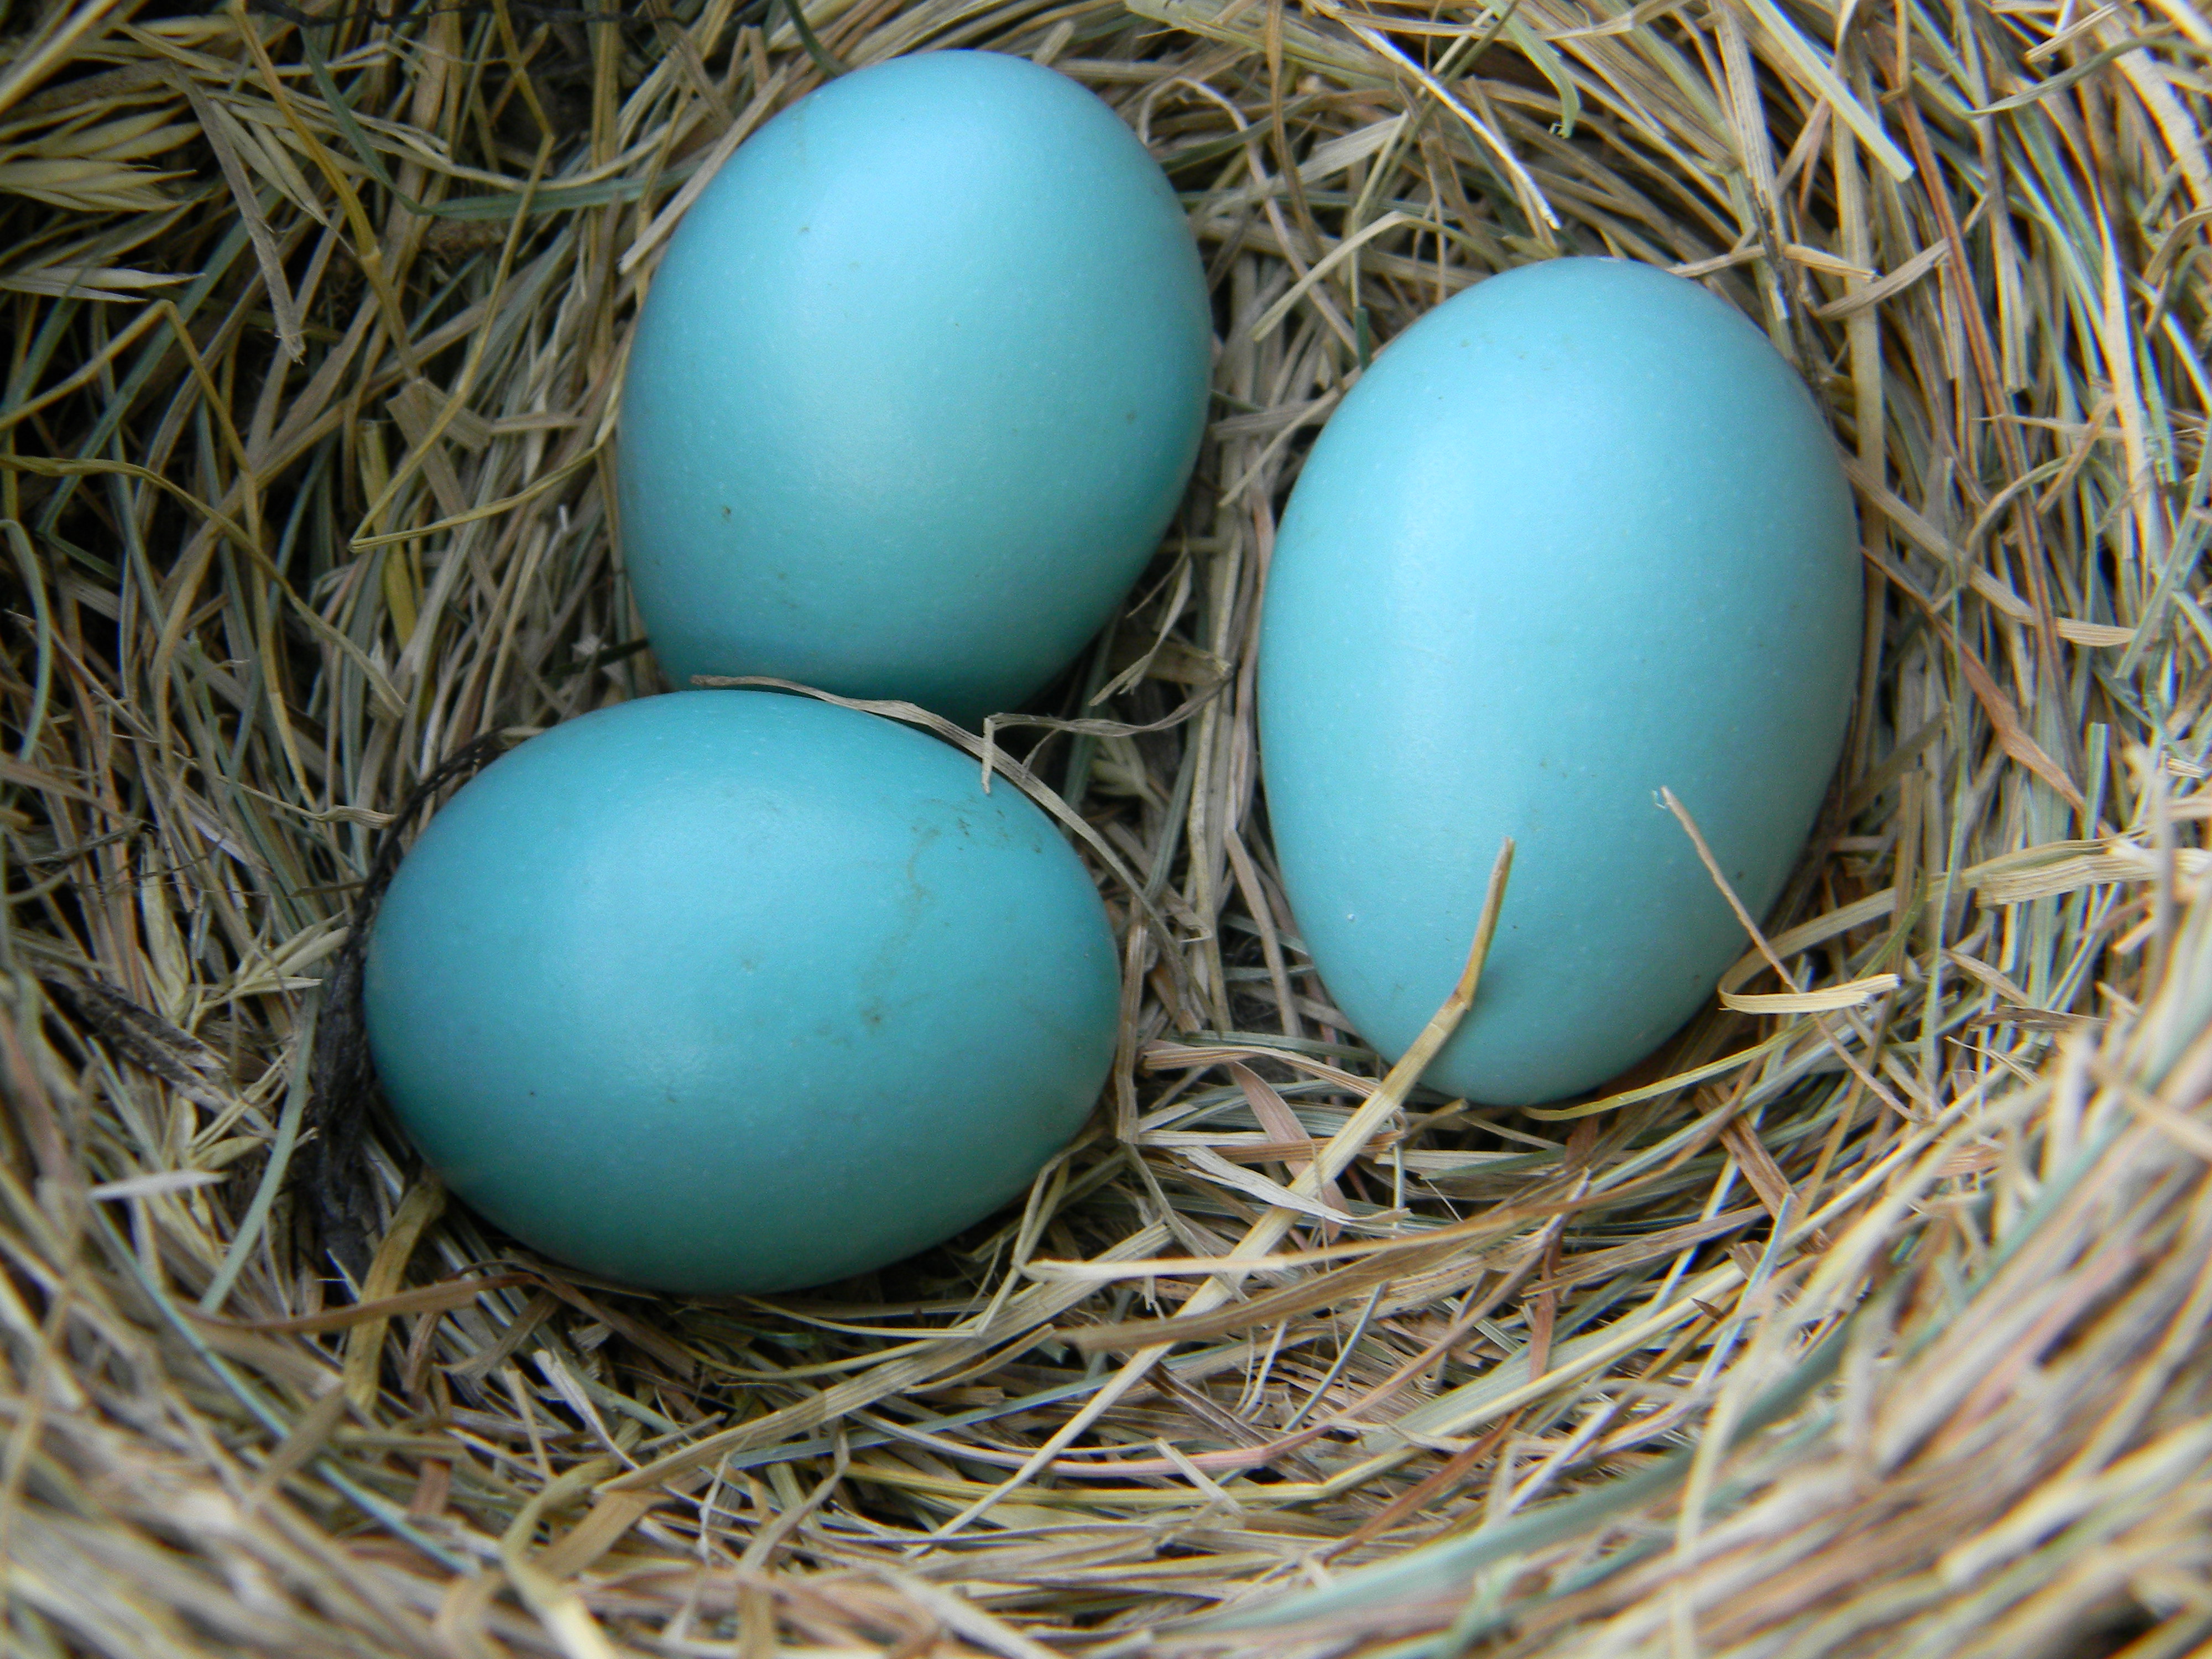 FileAmerican Robin Eggs in Nest.jpg Wikimedia Commons